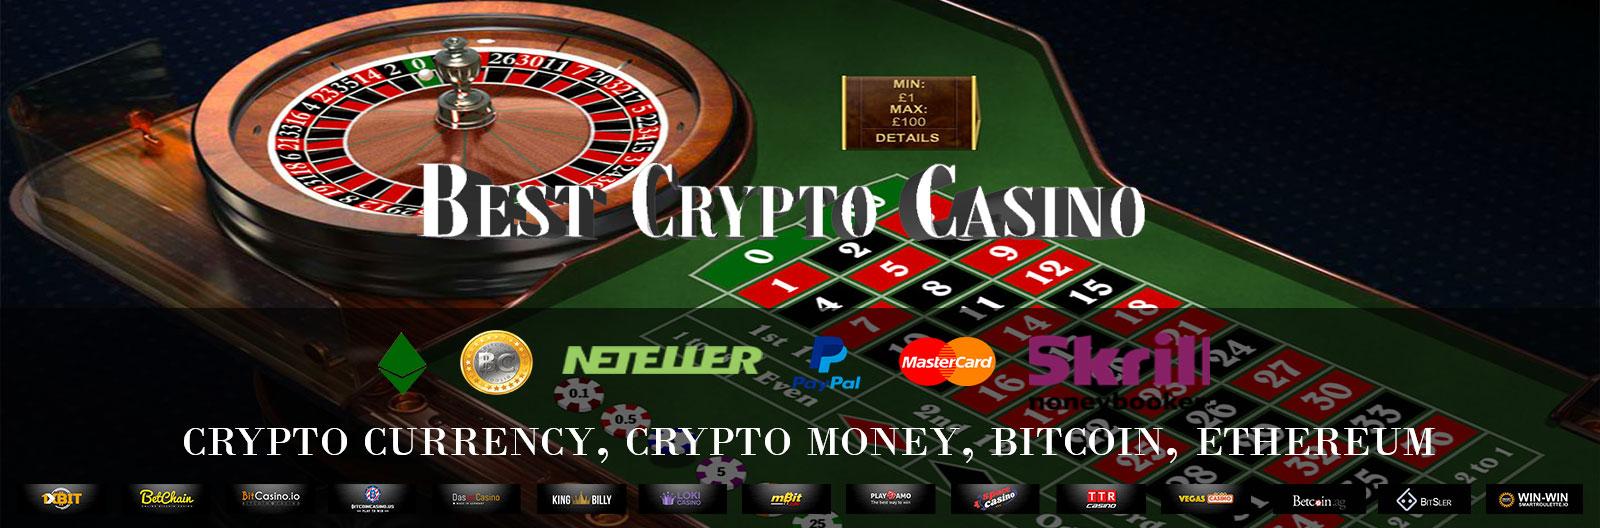 Casino online real money no deposit malaysia